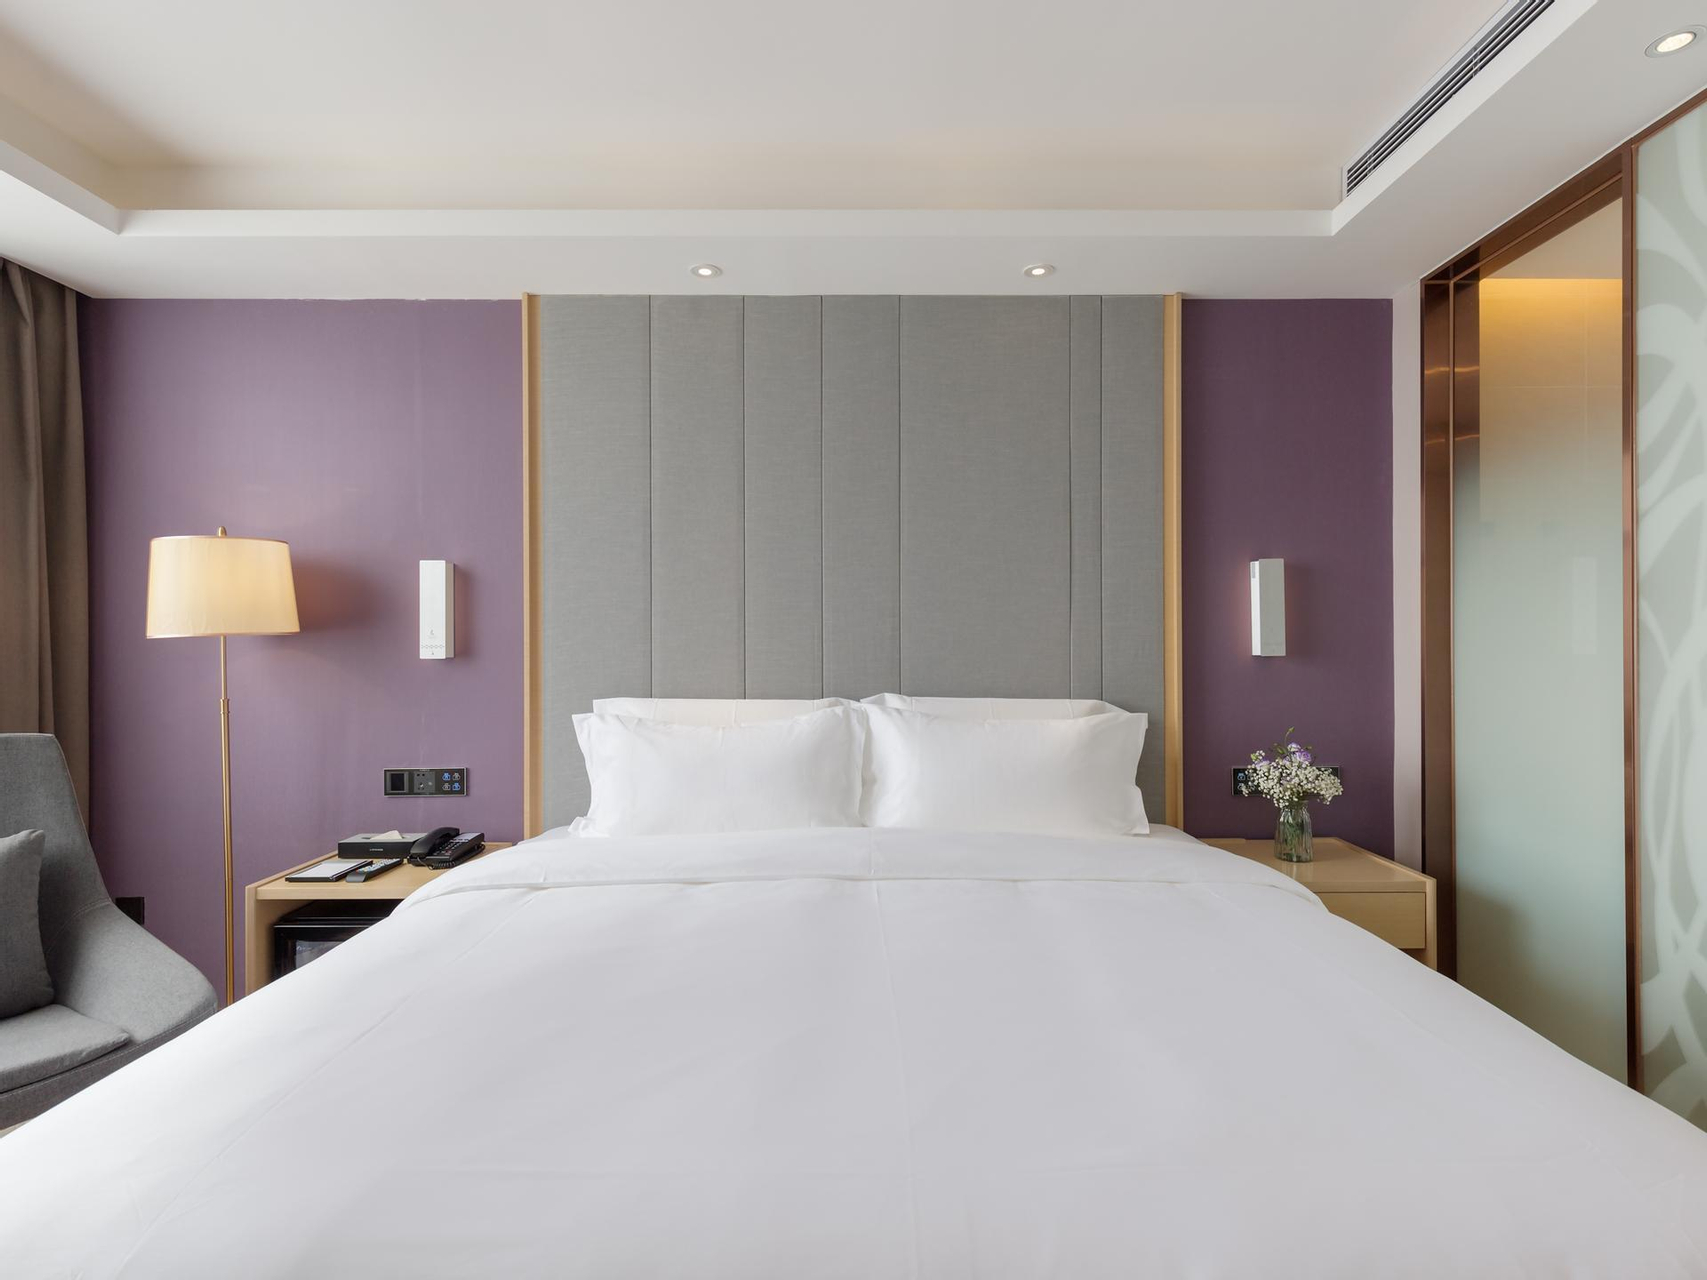 Bedroom, Lavande Hotels·Haikou Hainan University, Haikou